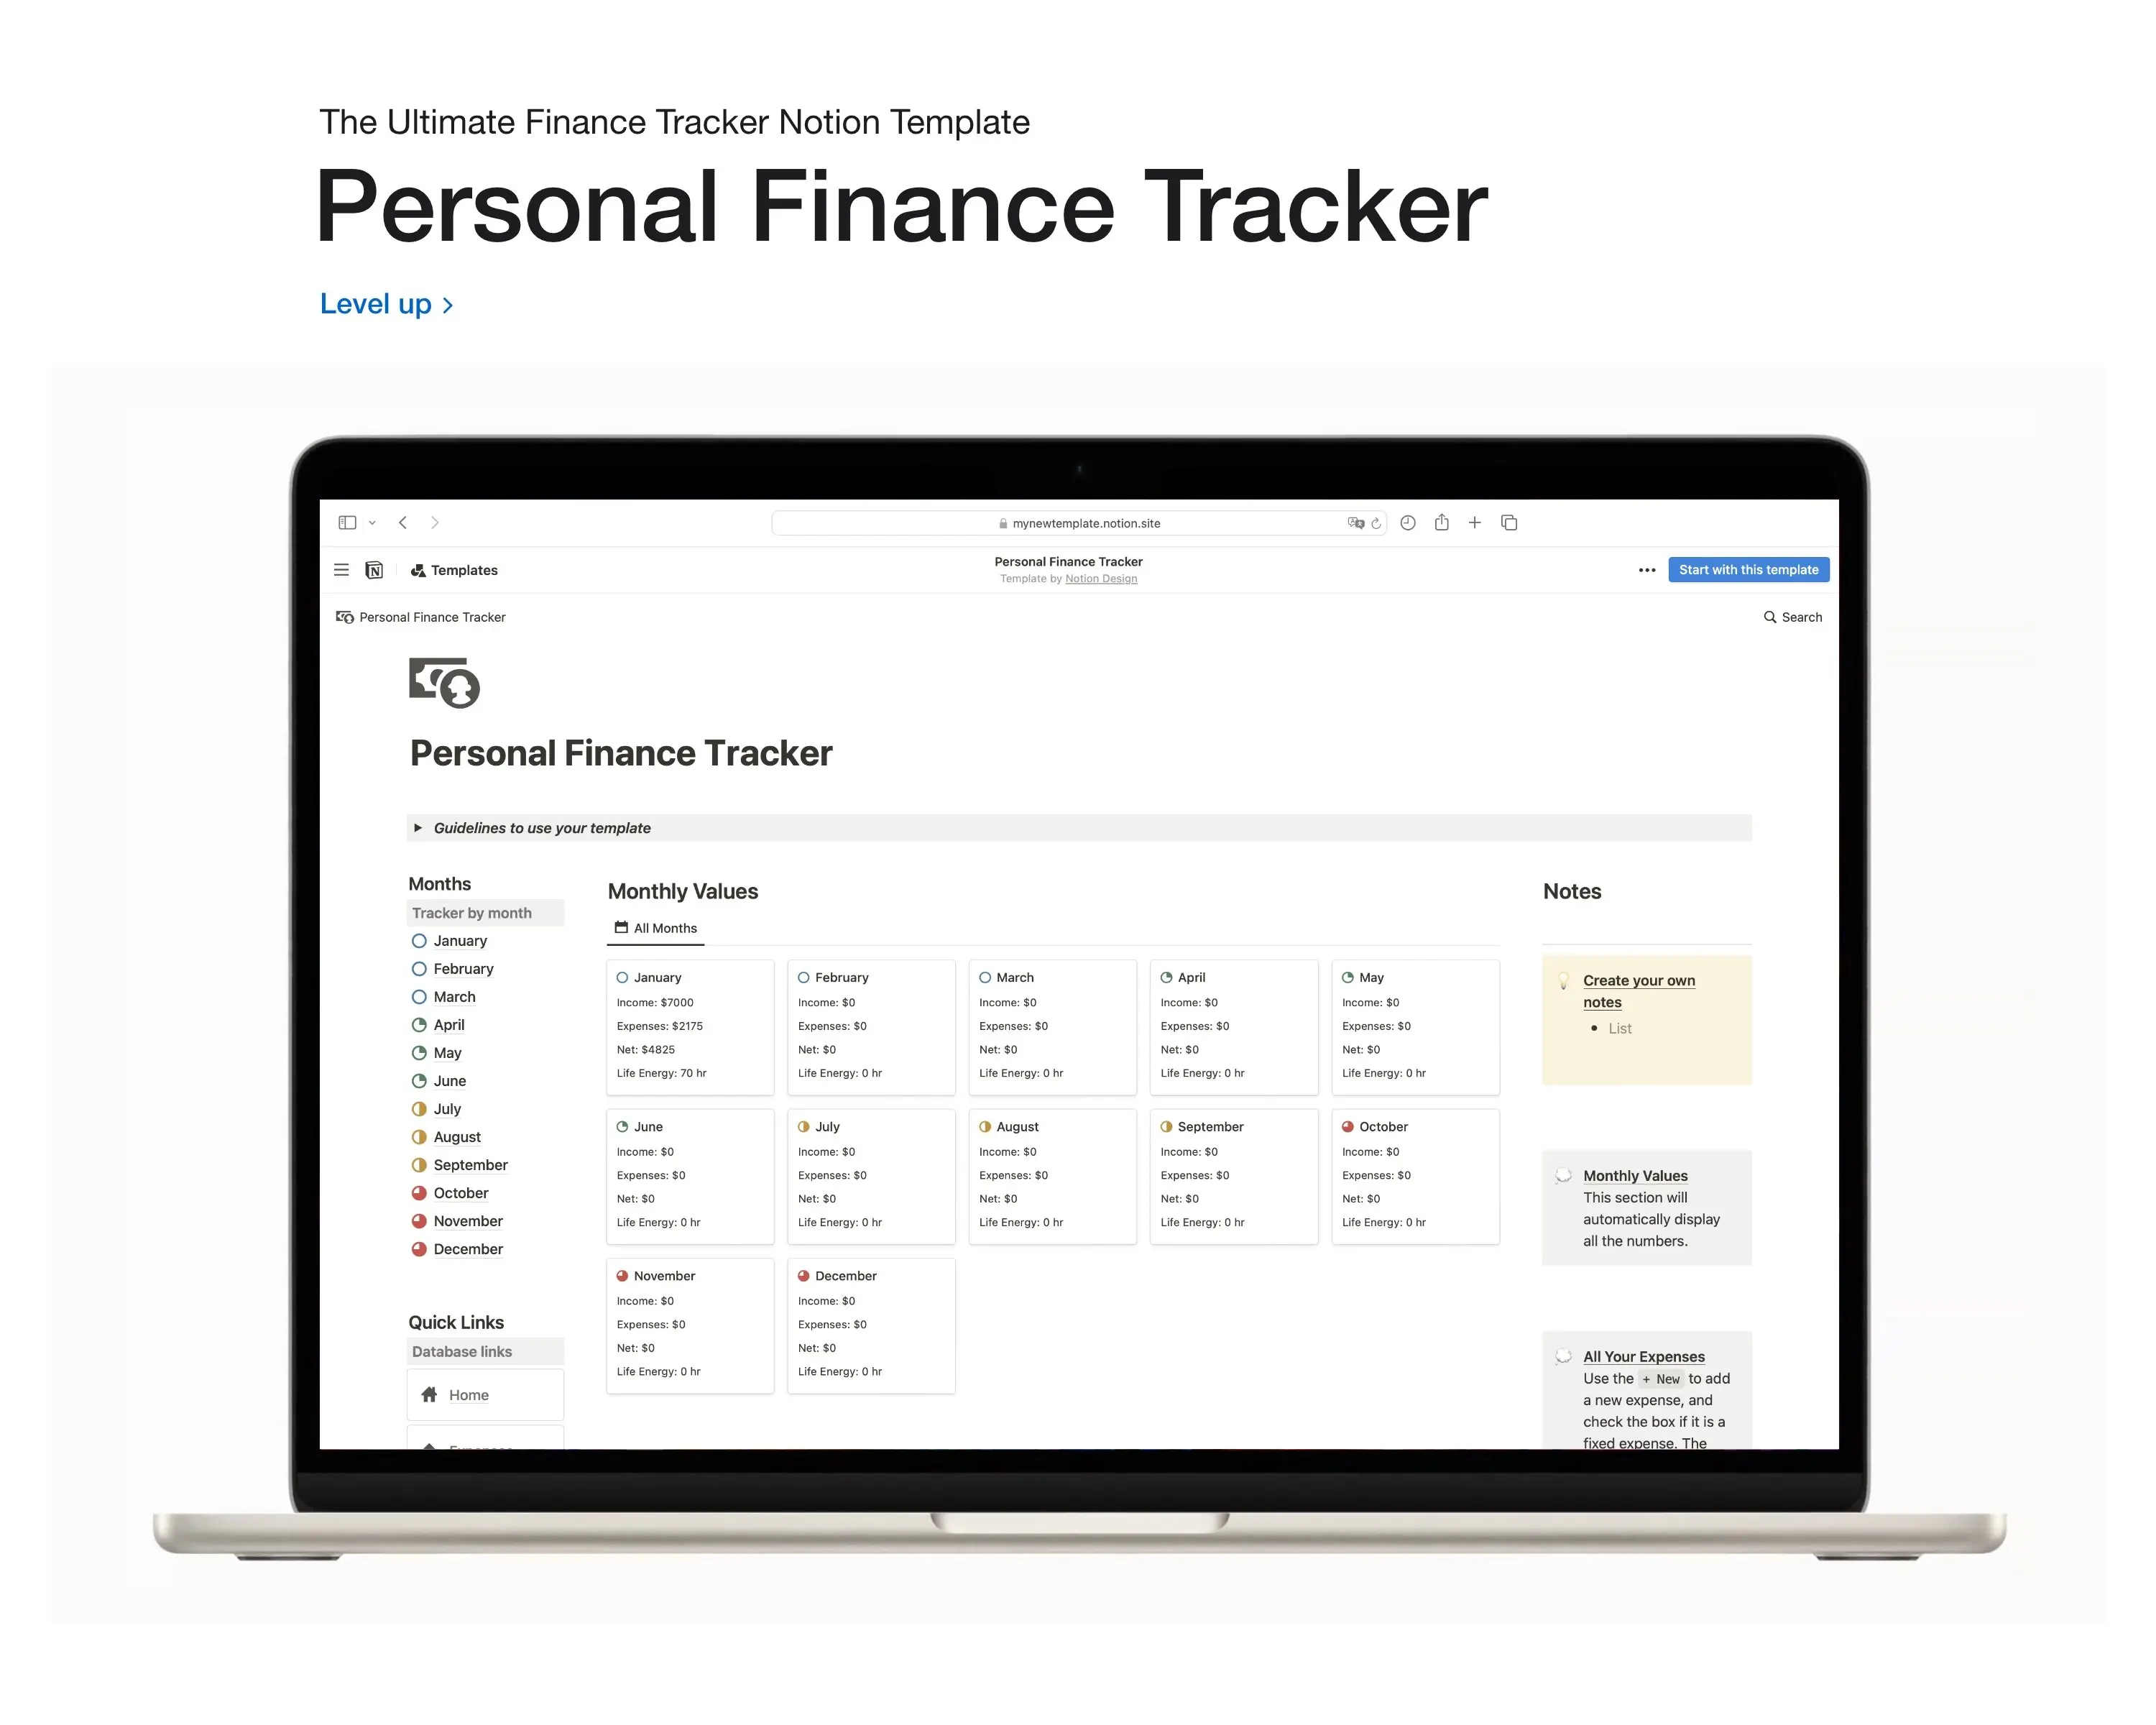 Personal Finance Tracker image